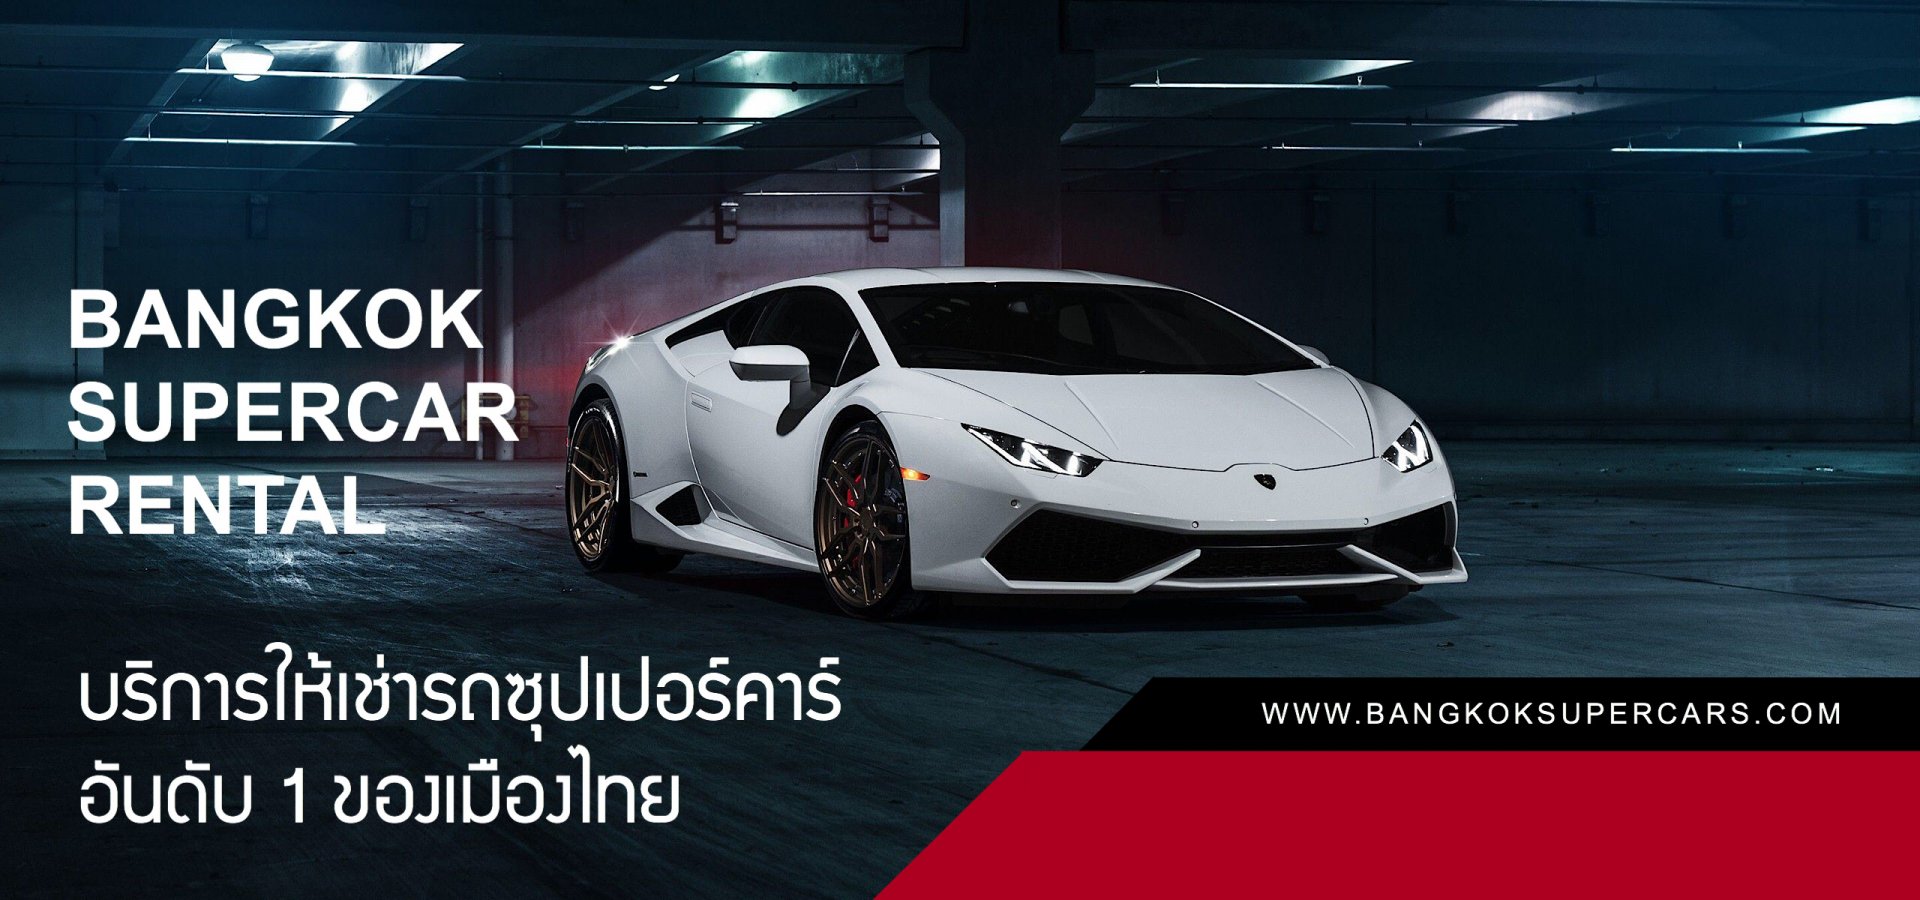 Bangkok Supercar Rental